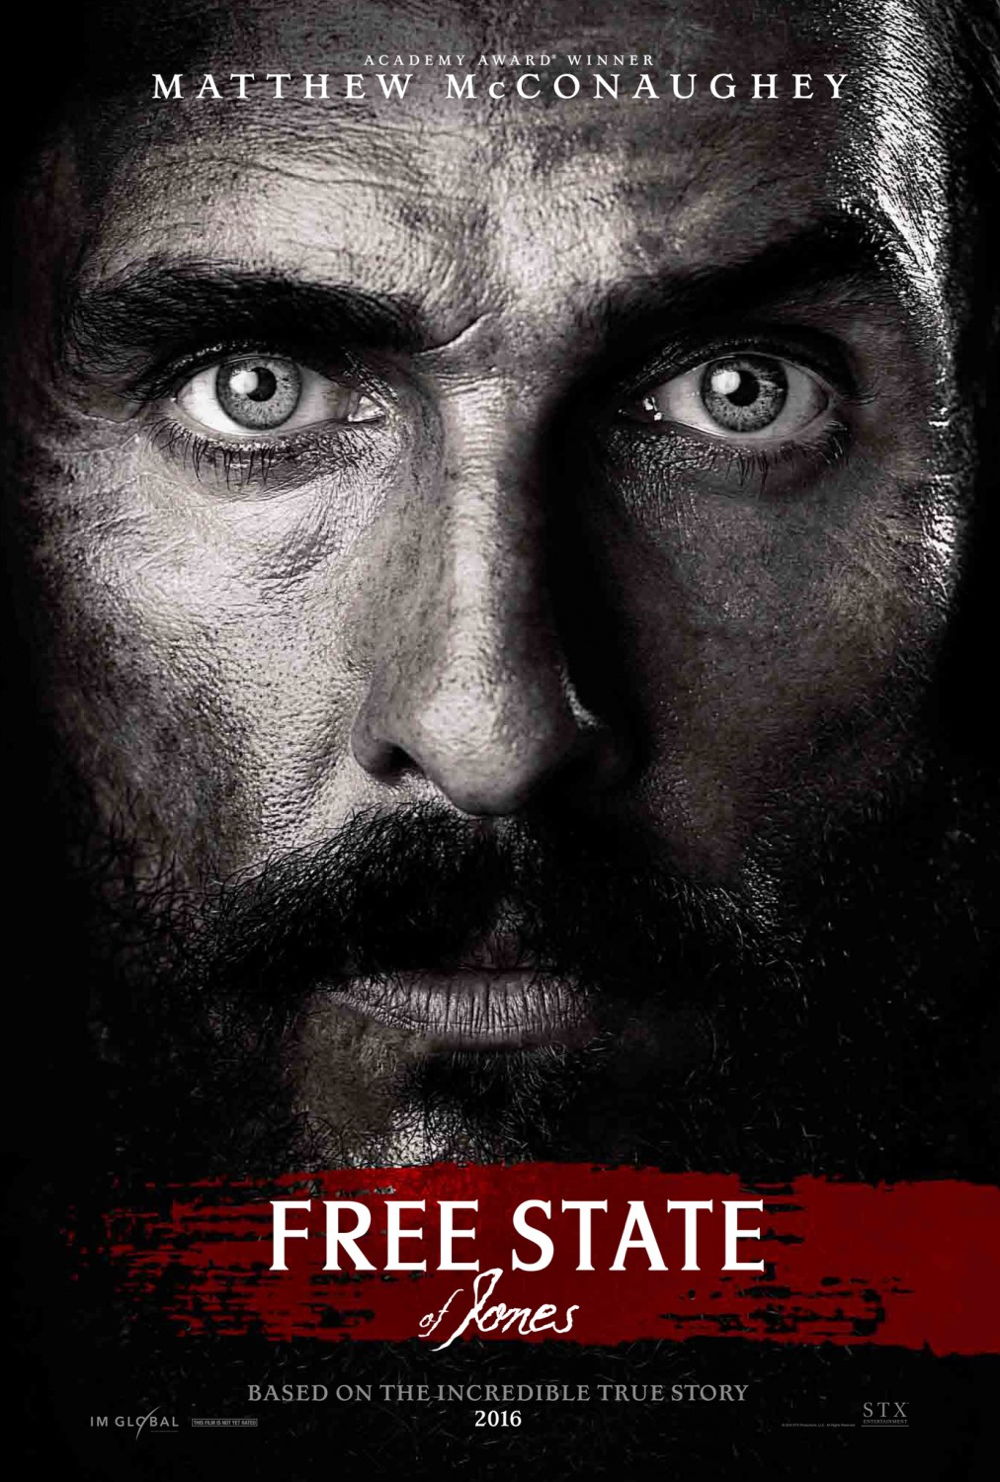 moviegoer.com: FREE STATE OF JONES movie poster